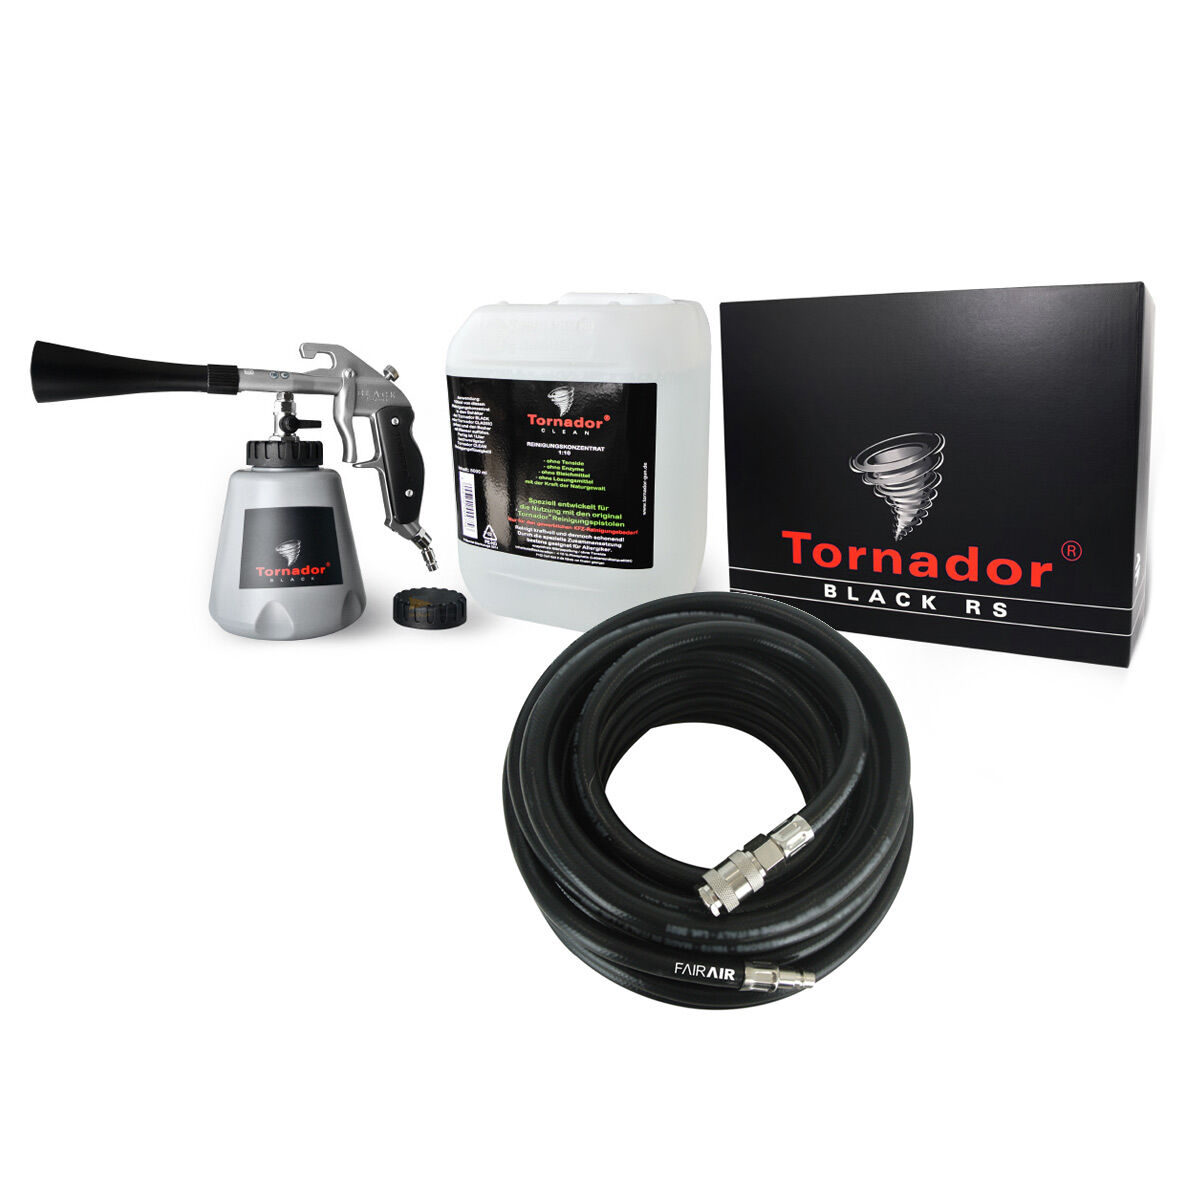 OFFERTA SPECIALE - Set Tornador: pistola per la pulizia Tornador BLACK Z-020RS incl. pulitore + tubo per aria compressa